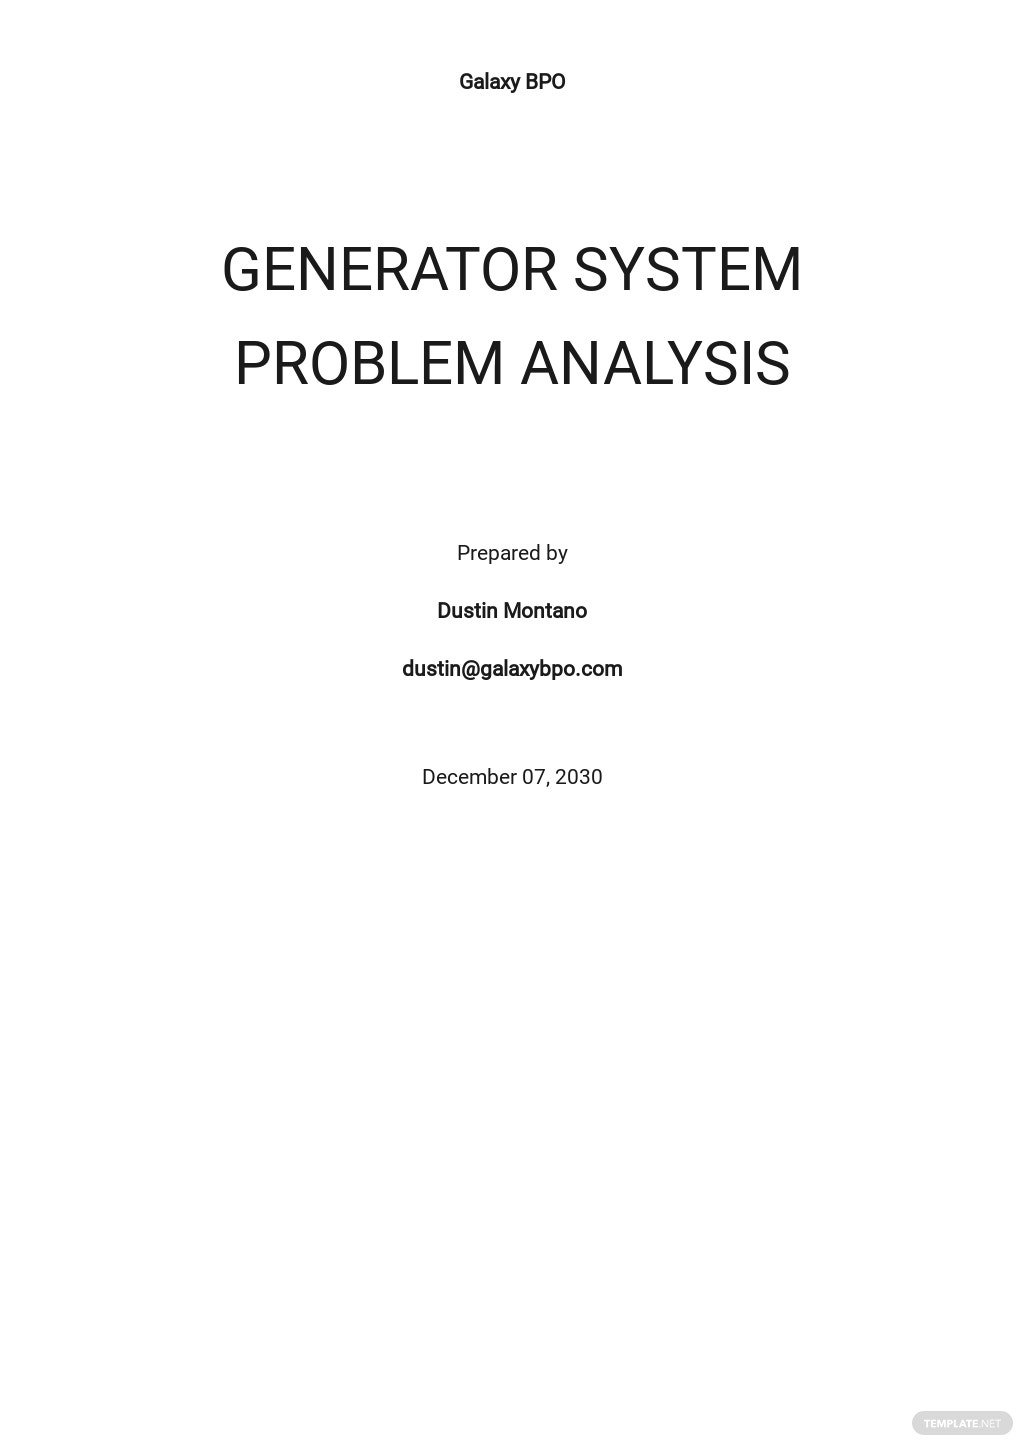 problem analysis template